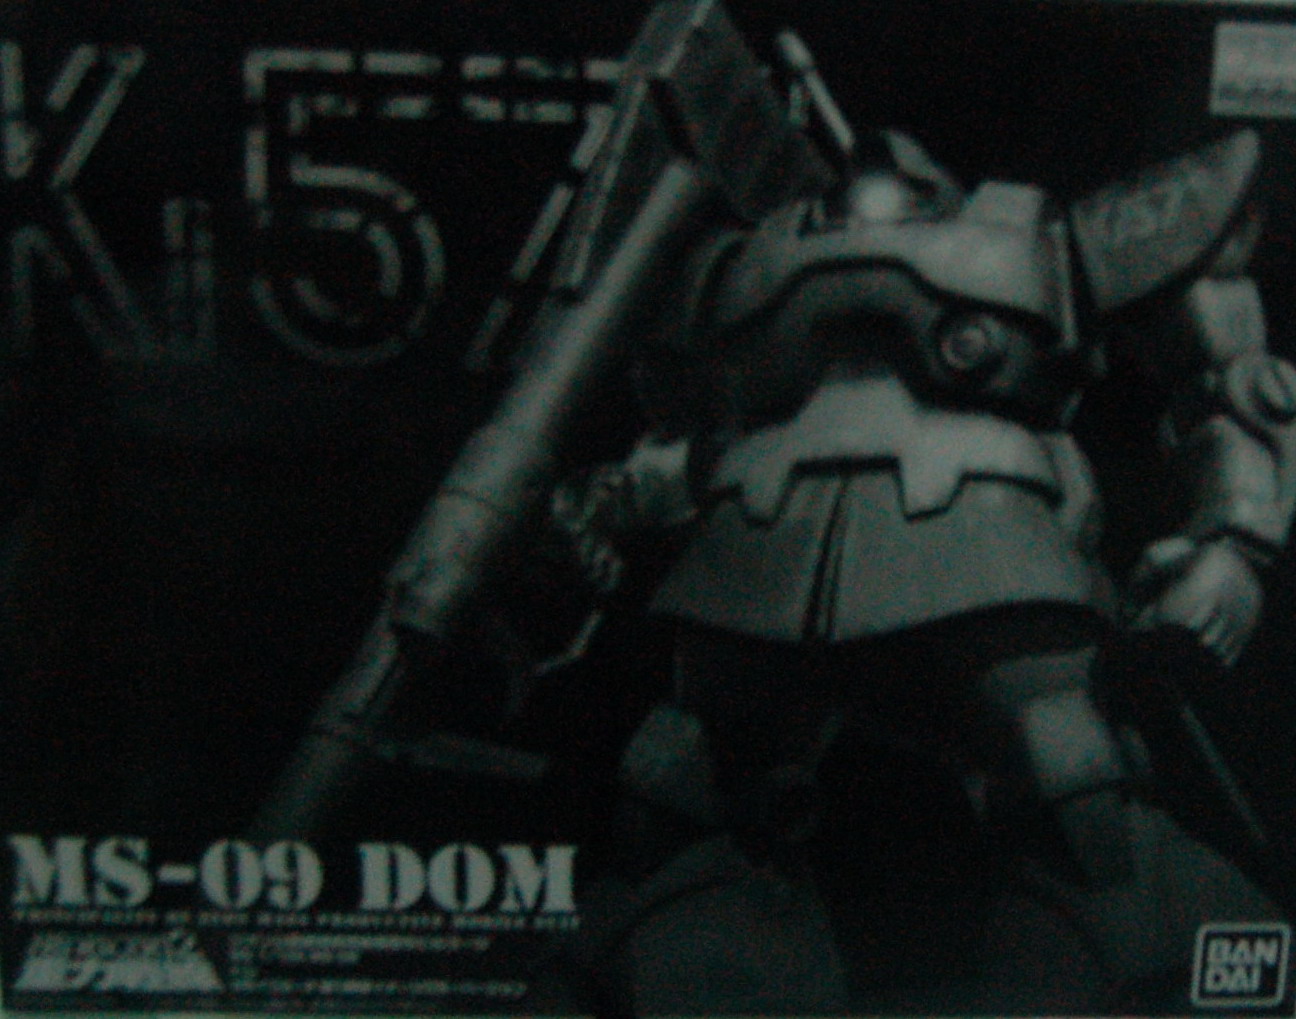 MG 重力戰線 MS-09 DOM